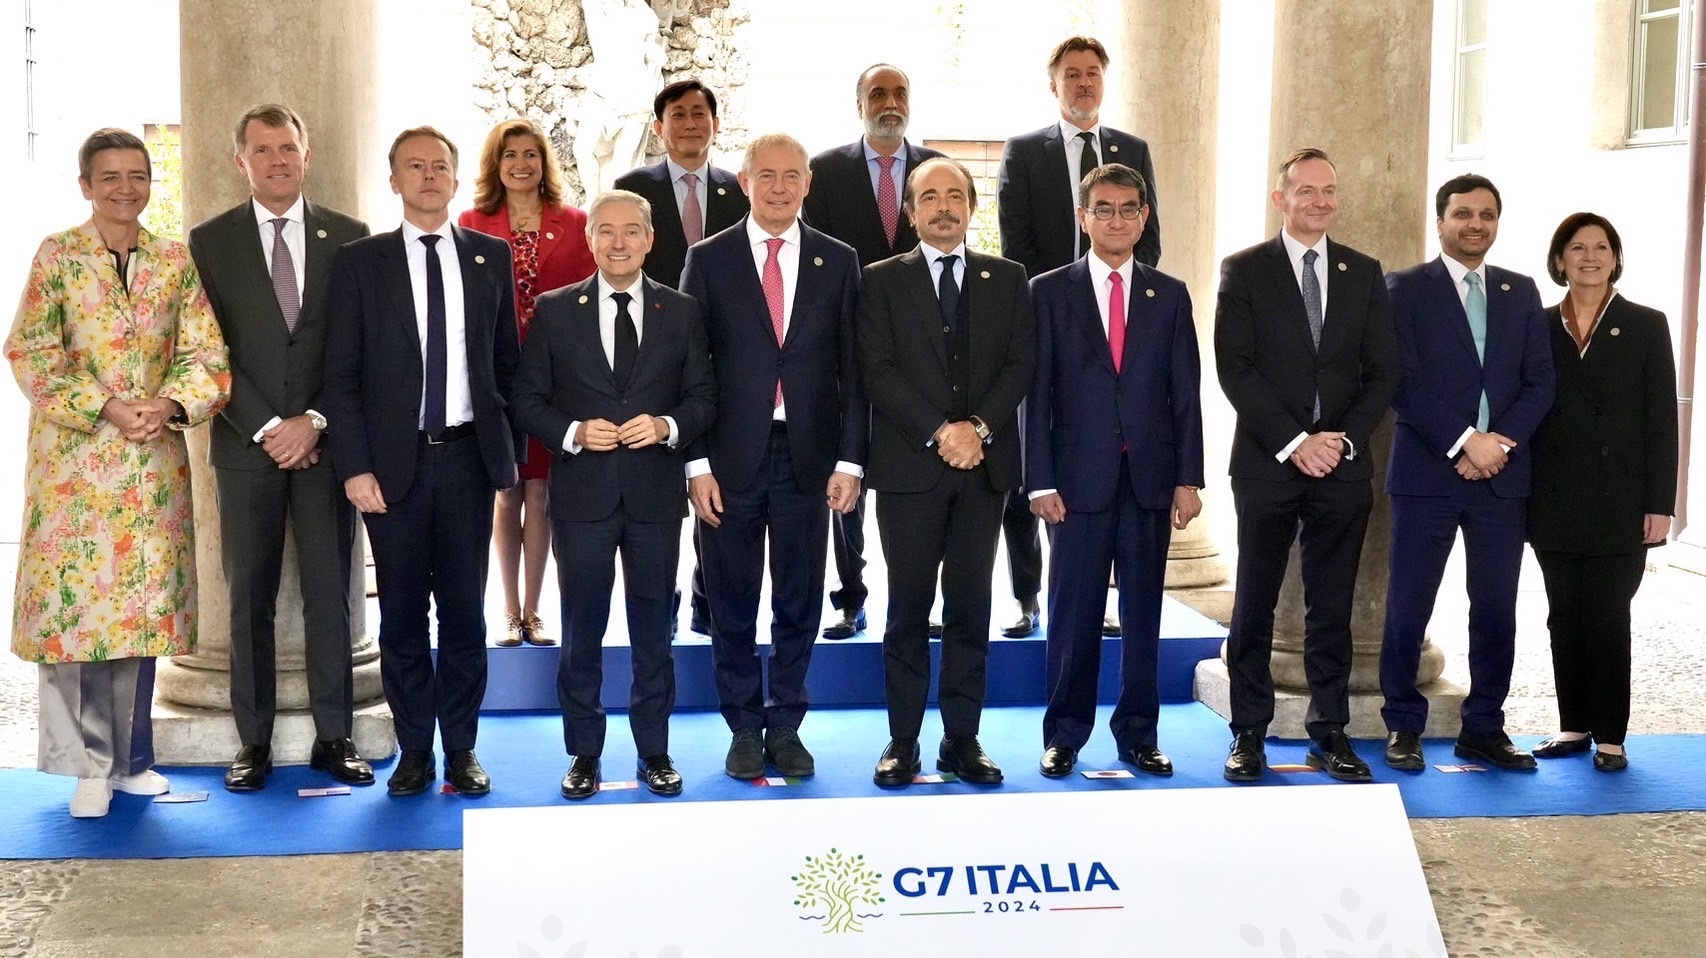 G7産業・技術・デジタル大臣会合 出席閣僚との集合写真。前列、右から4人目が河野大臣。